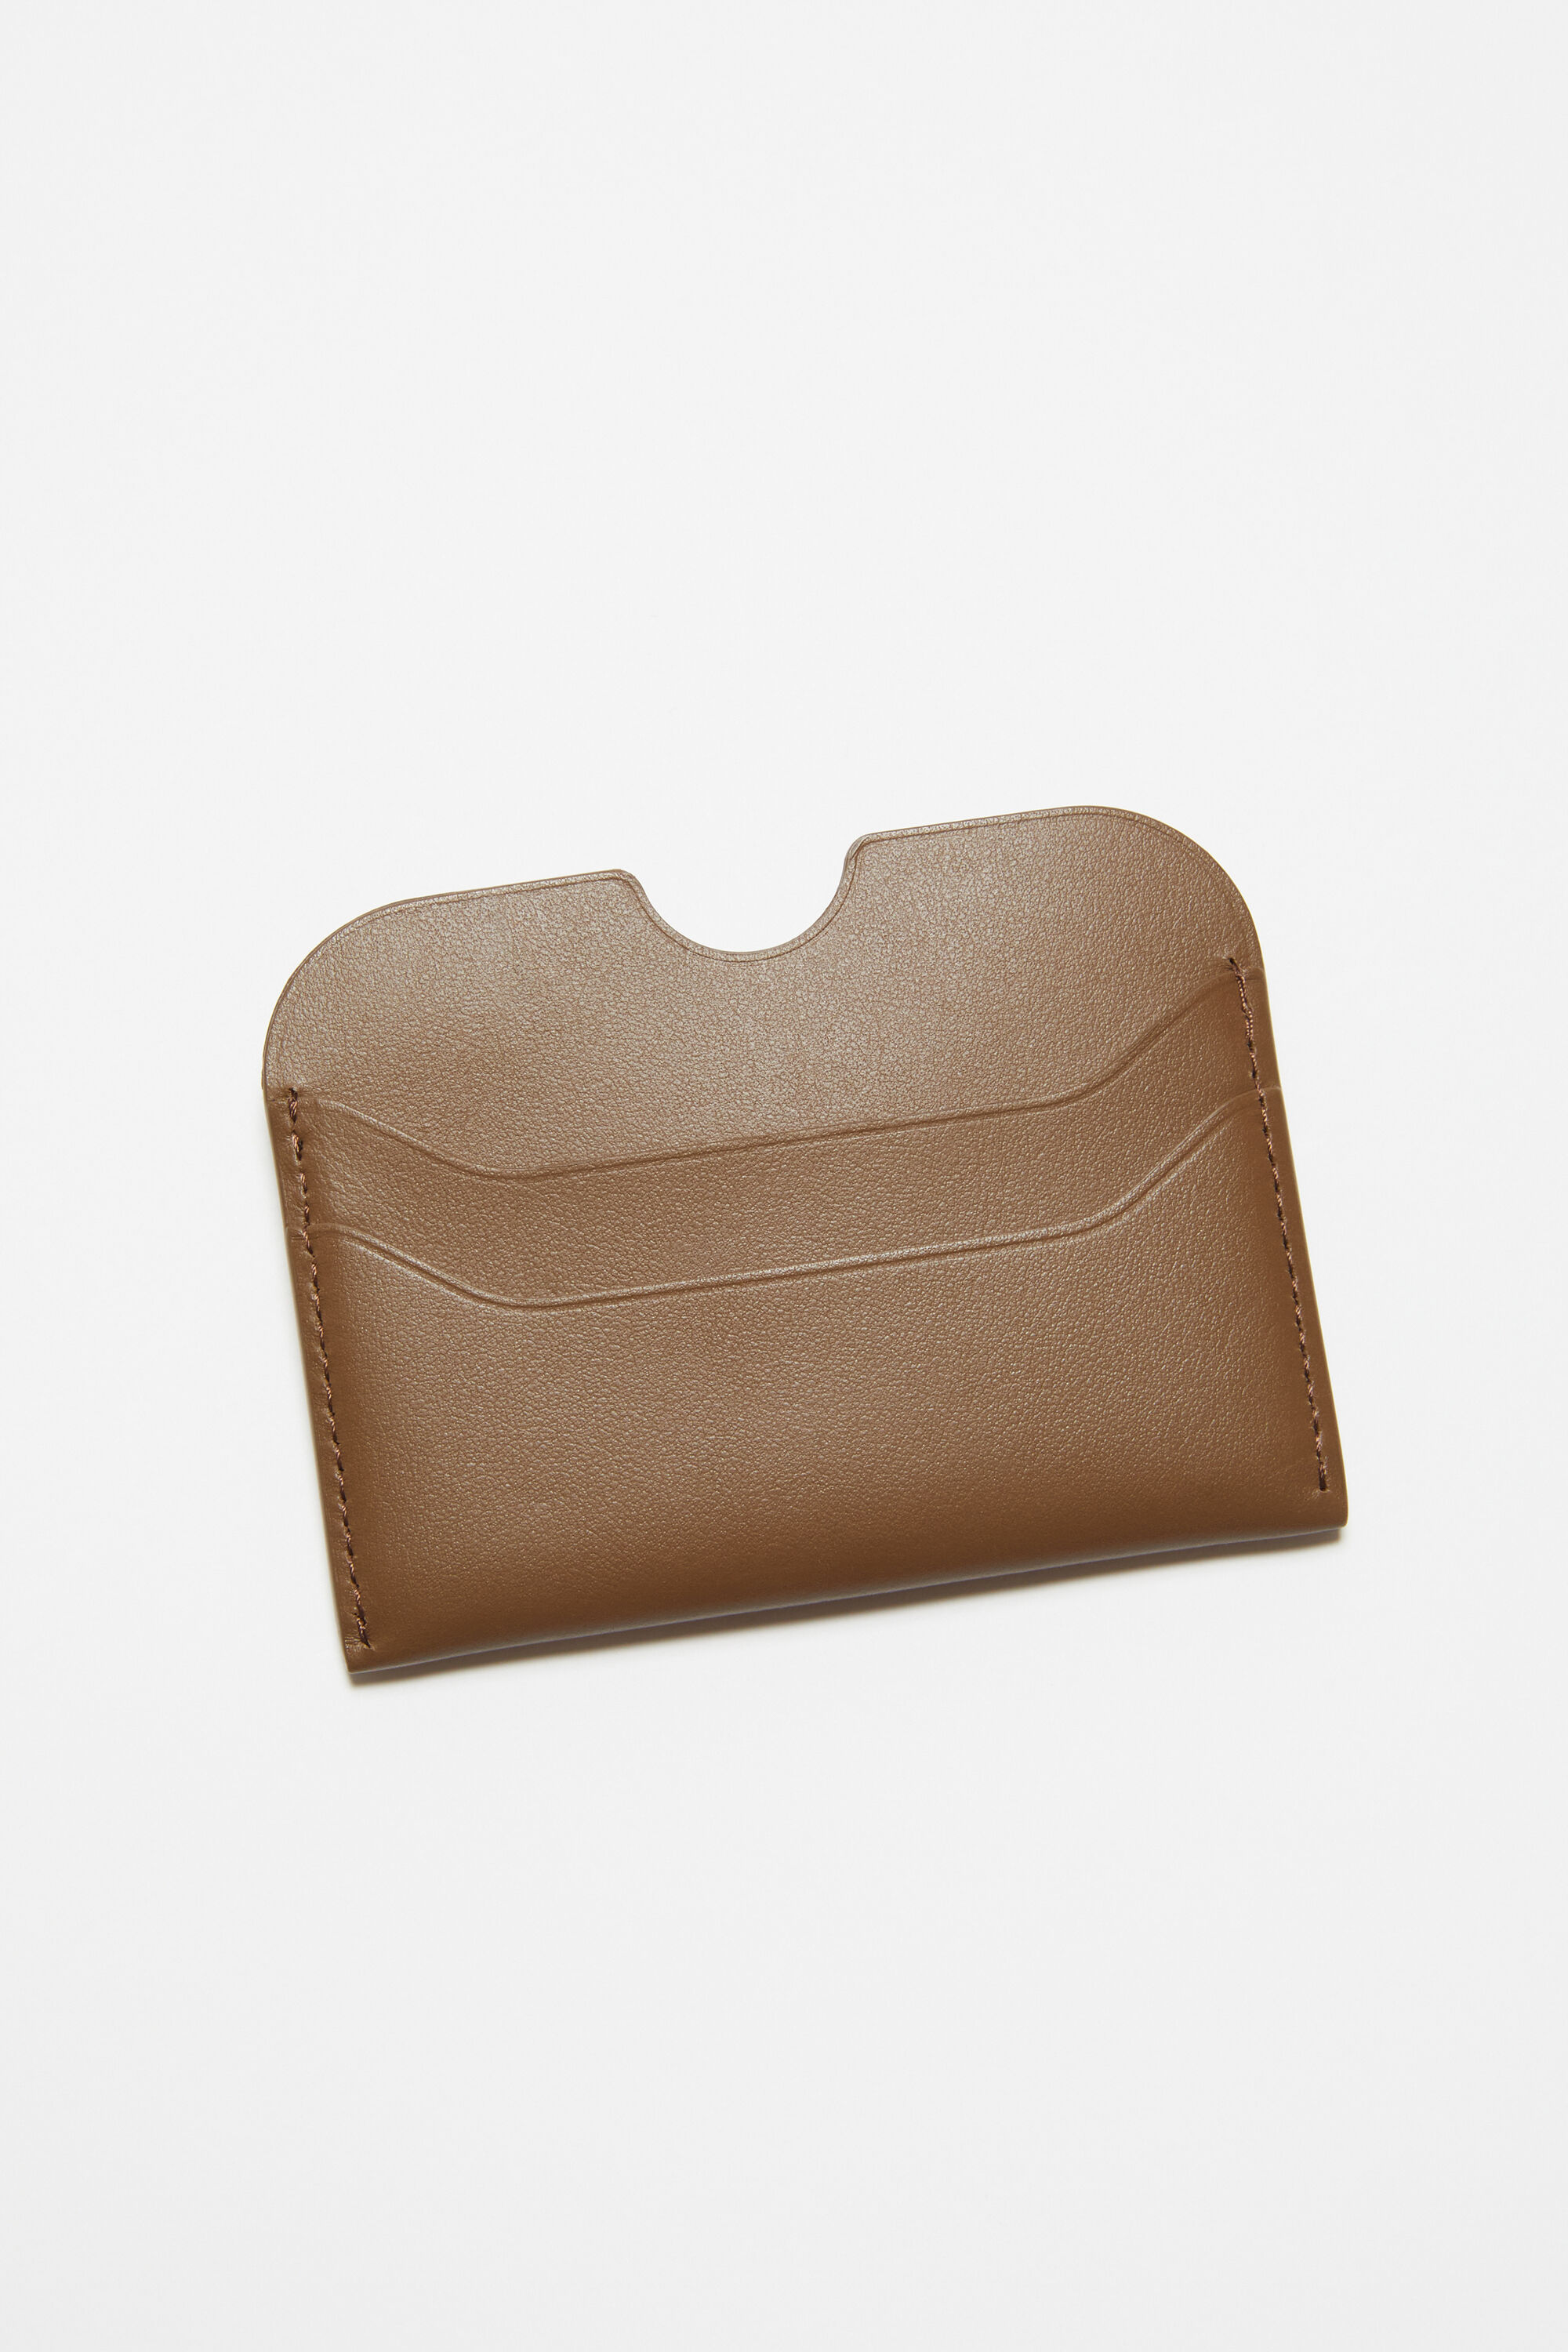 Acne Studios - Leather card holder - Camel brown